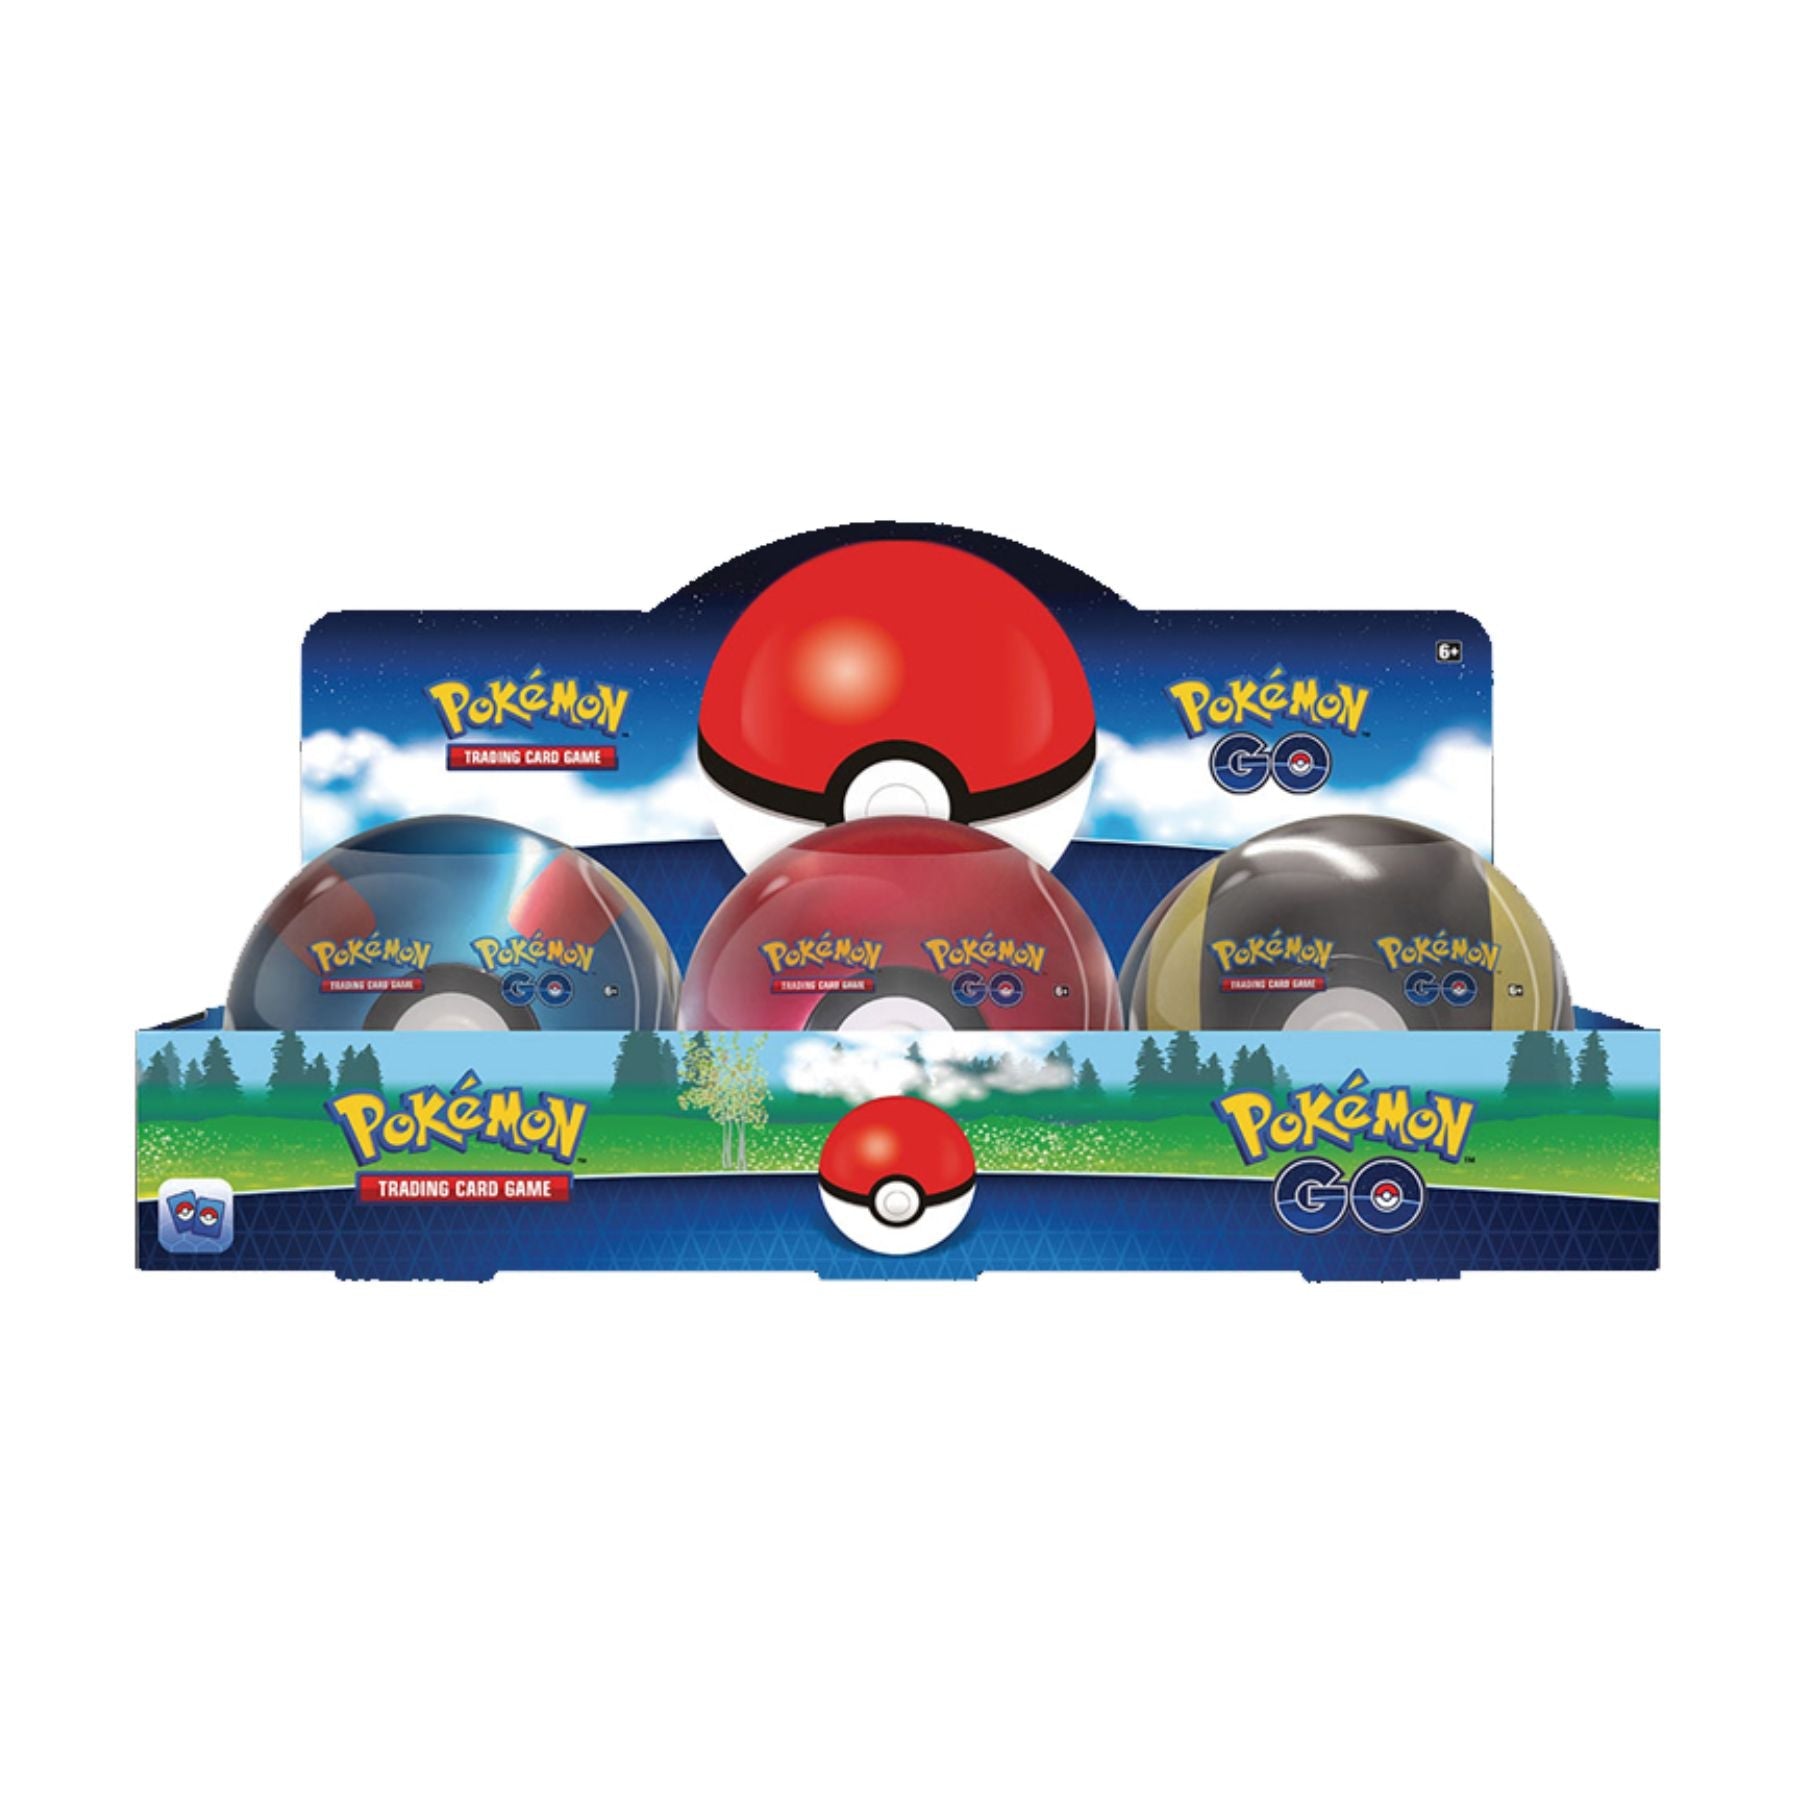 Pokemon GO Poké Ball Tins Display of 6